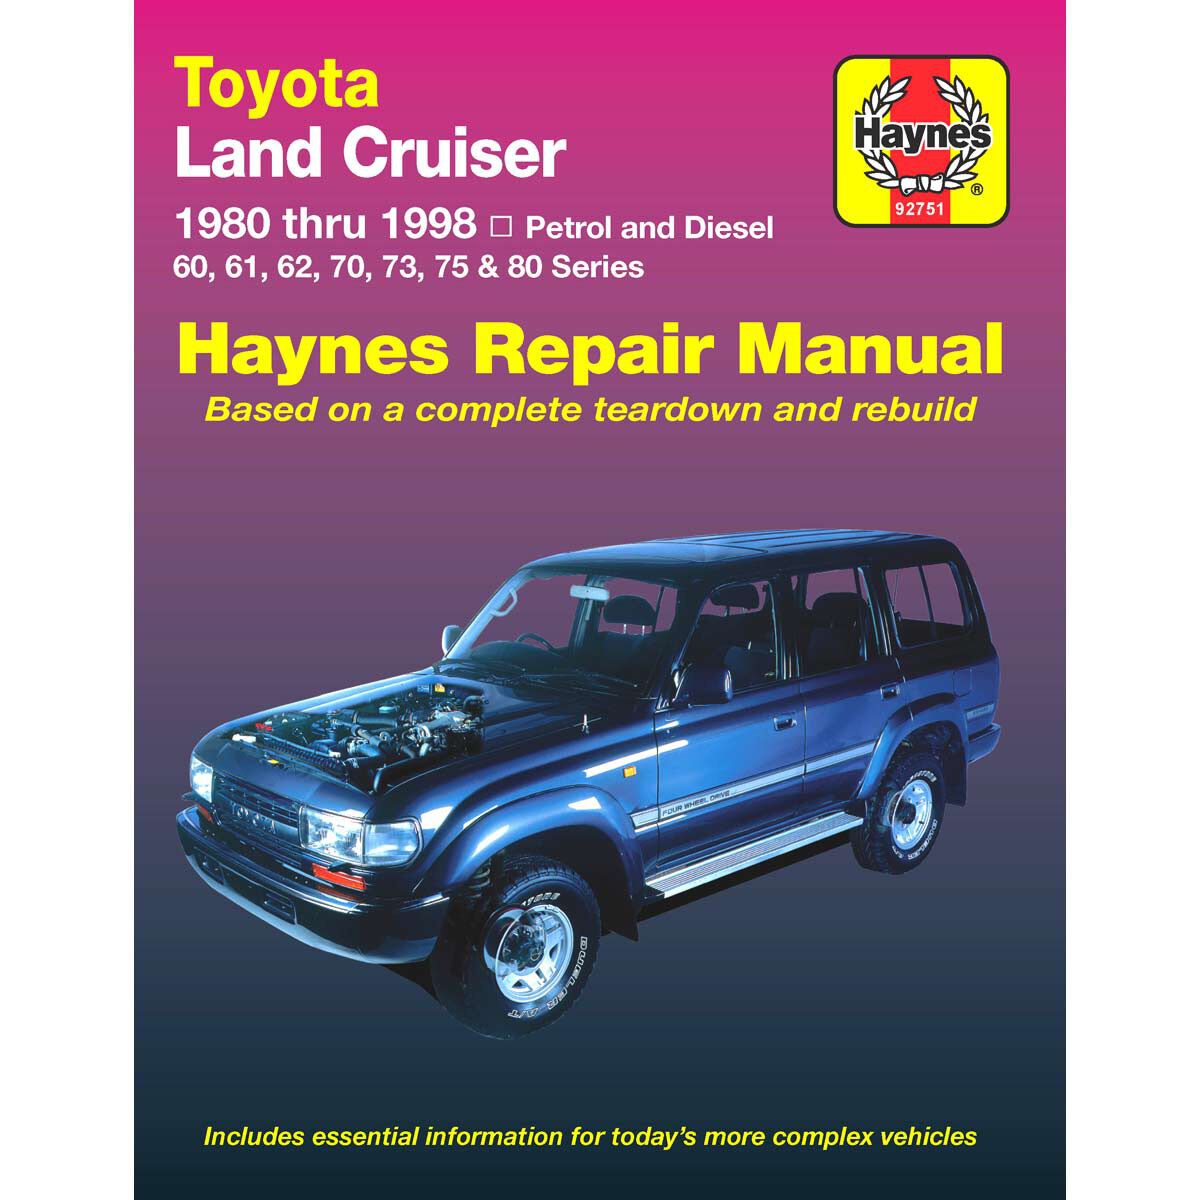 Haynes Car Manual For Toyota Landcruiser Petrol and Diesel 1980-1998 - 92751, , scaau_hi-res